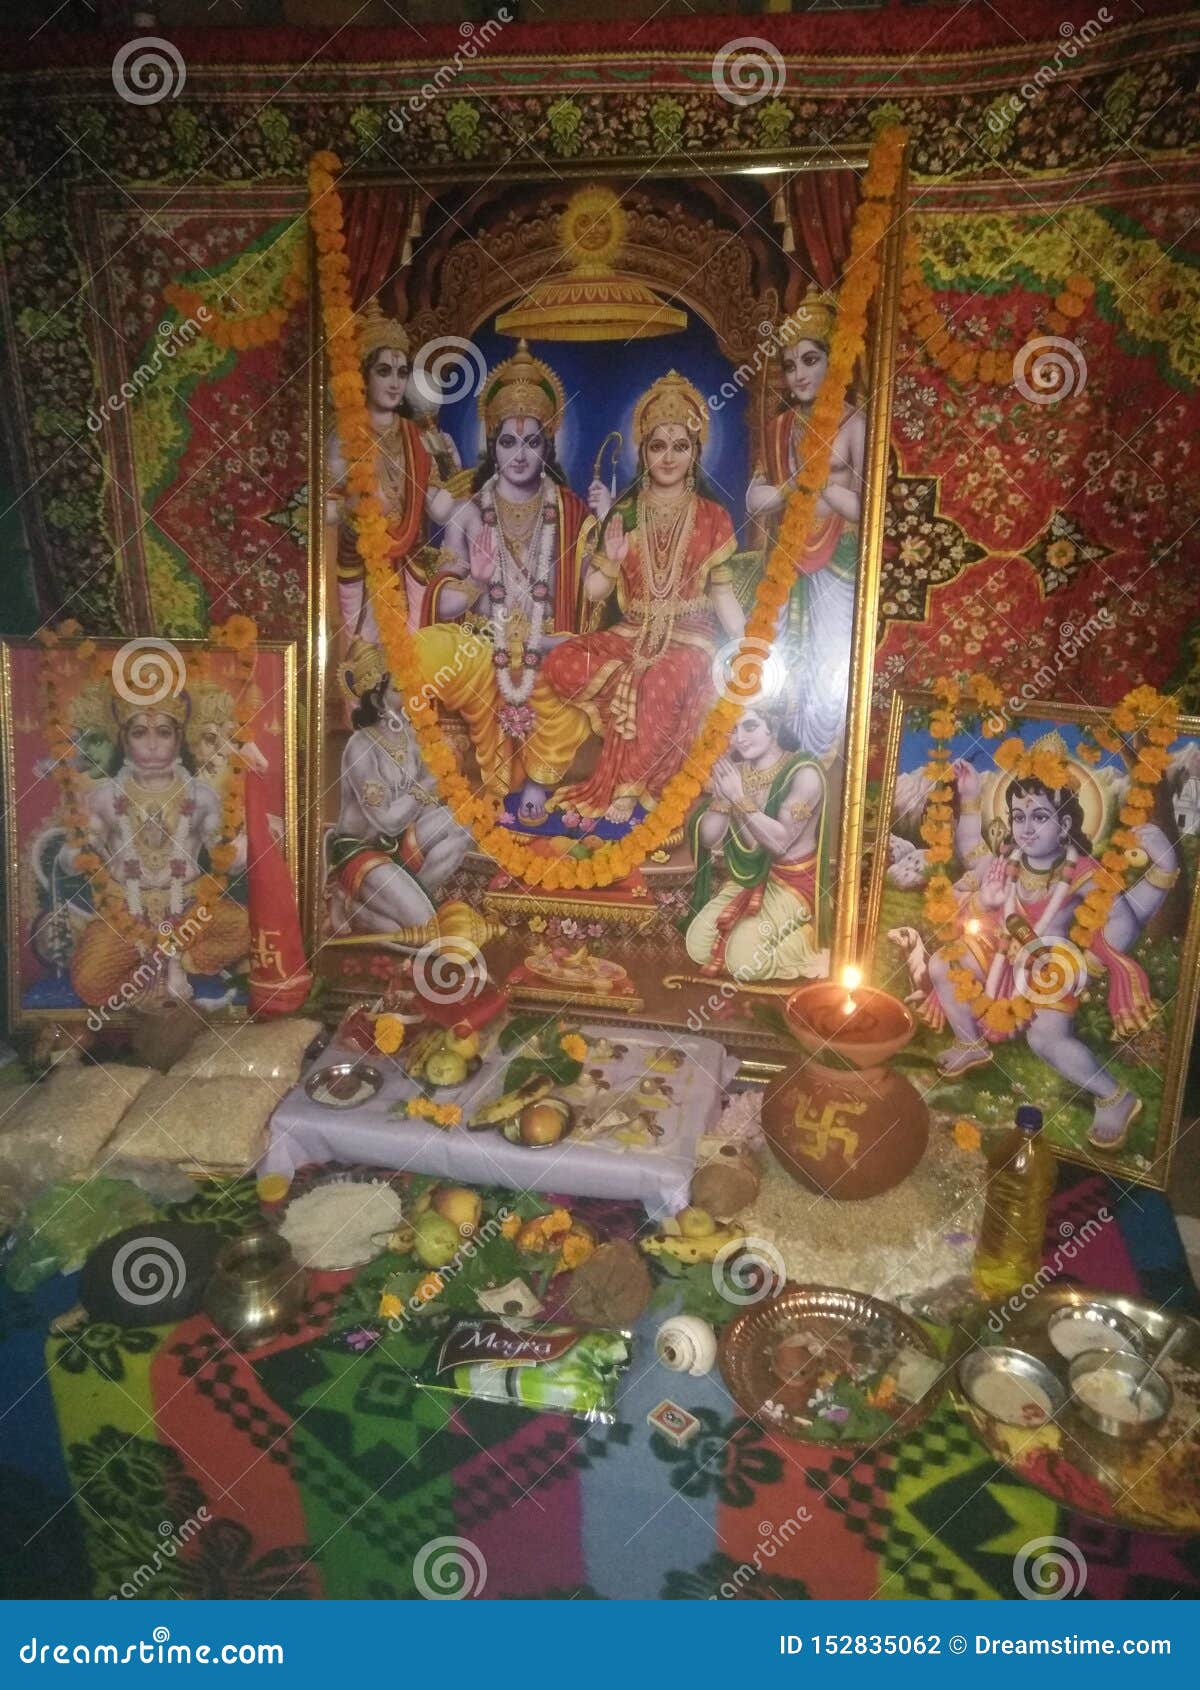 Ram darbar stock photo. Image of lord, ramlala, sitaram - 152835062